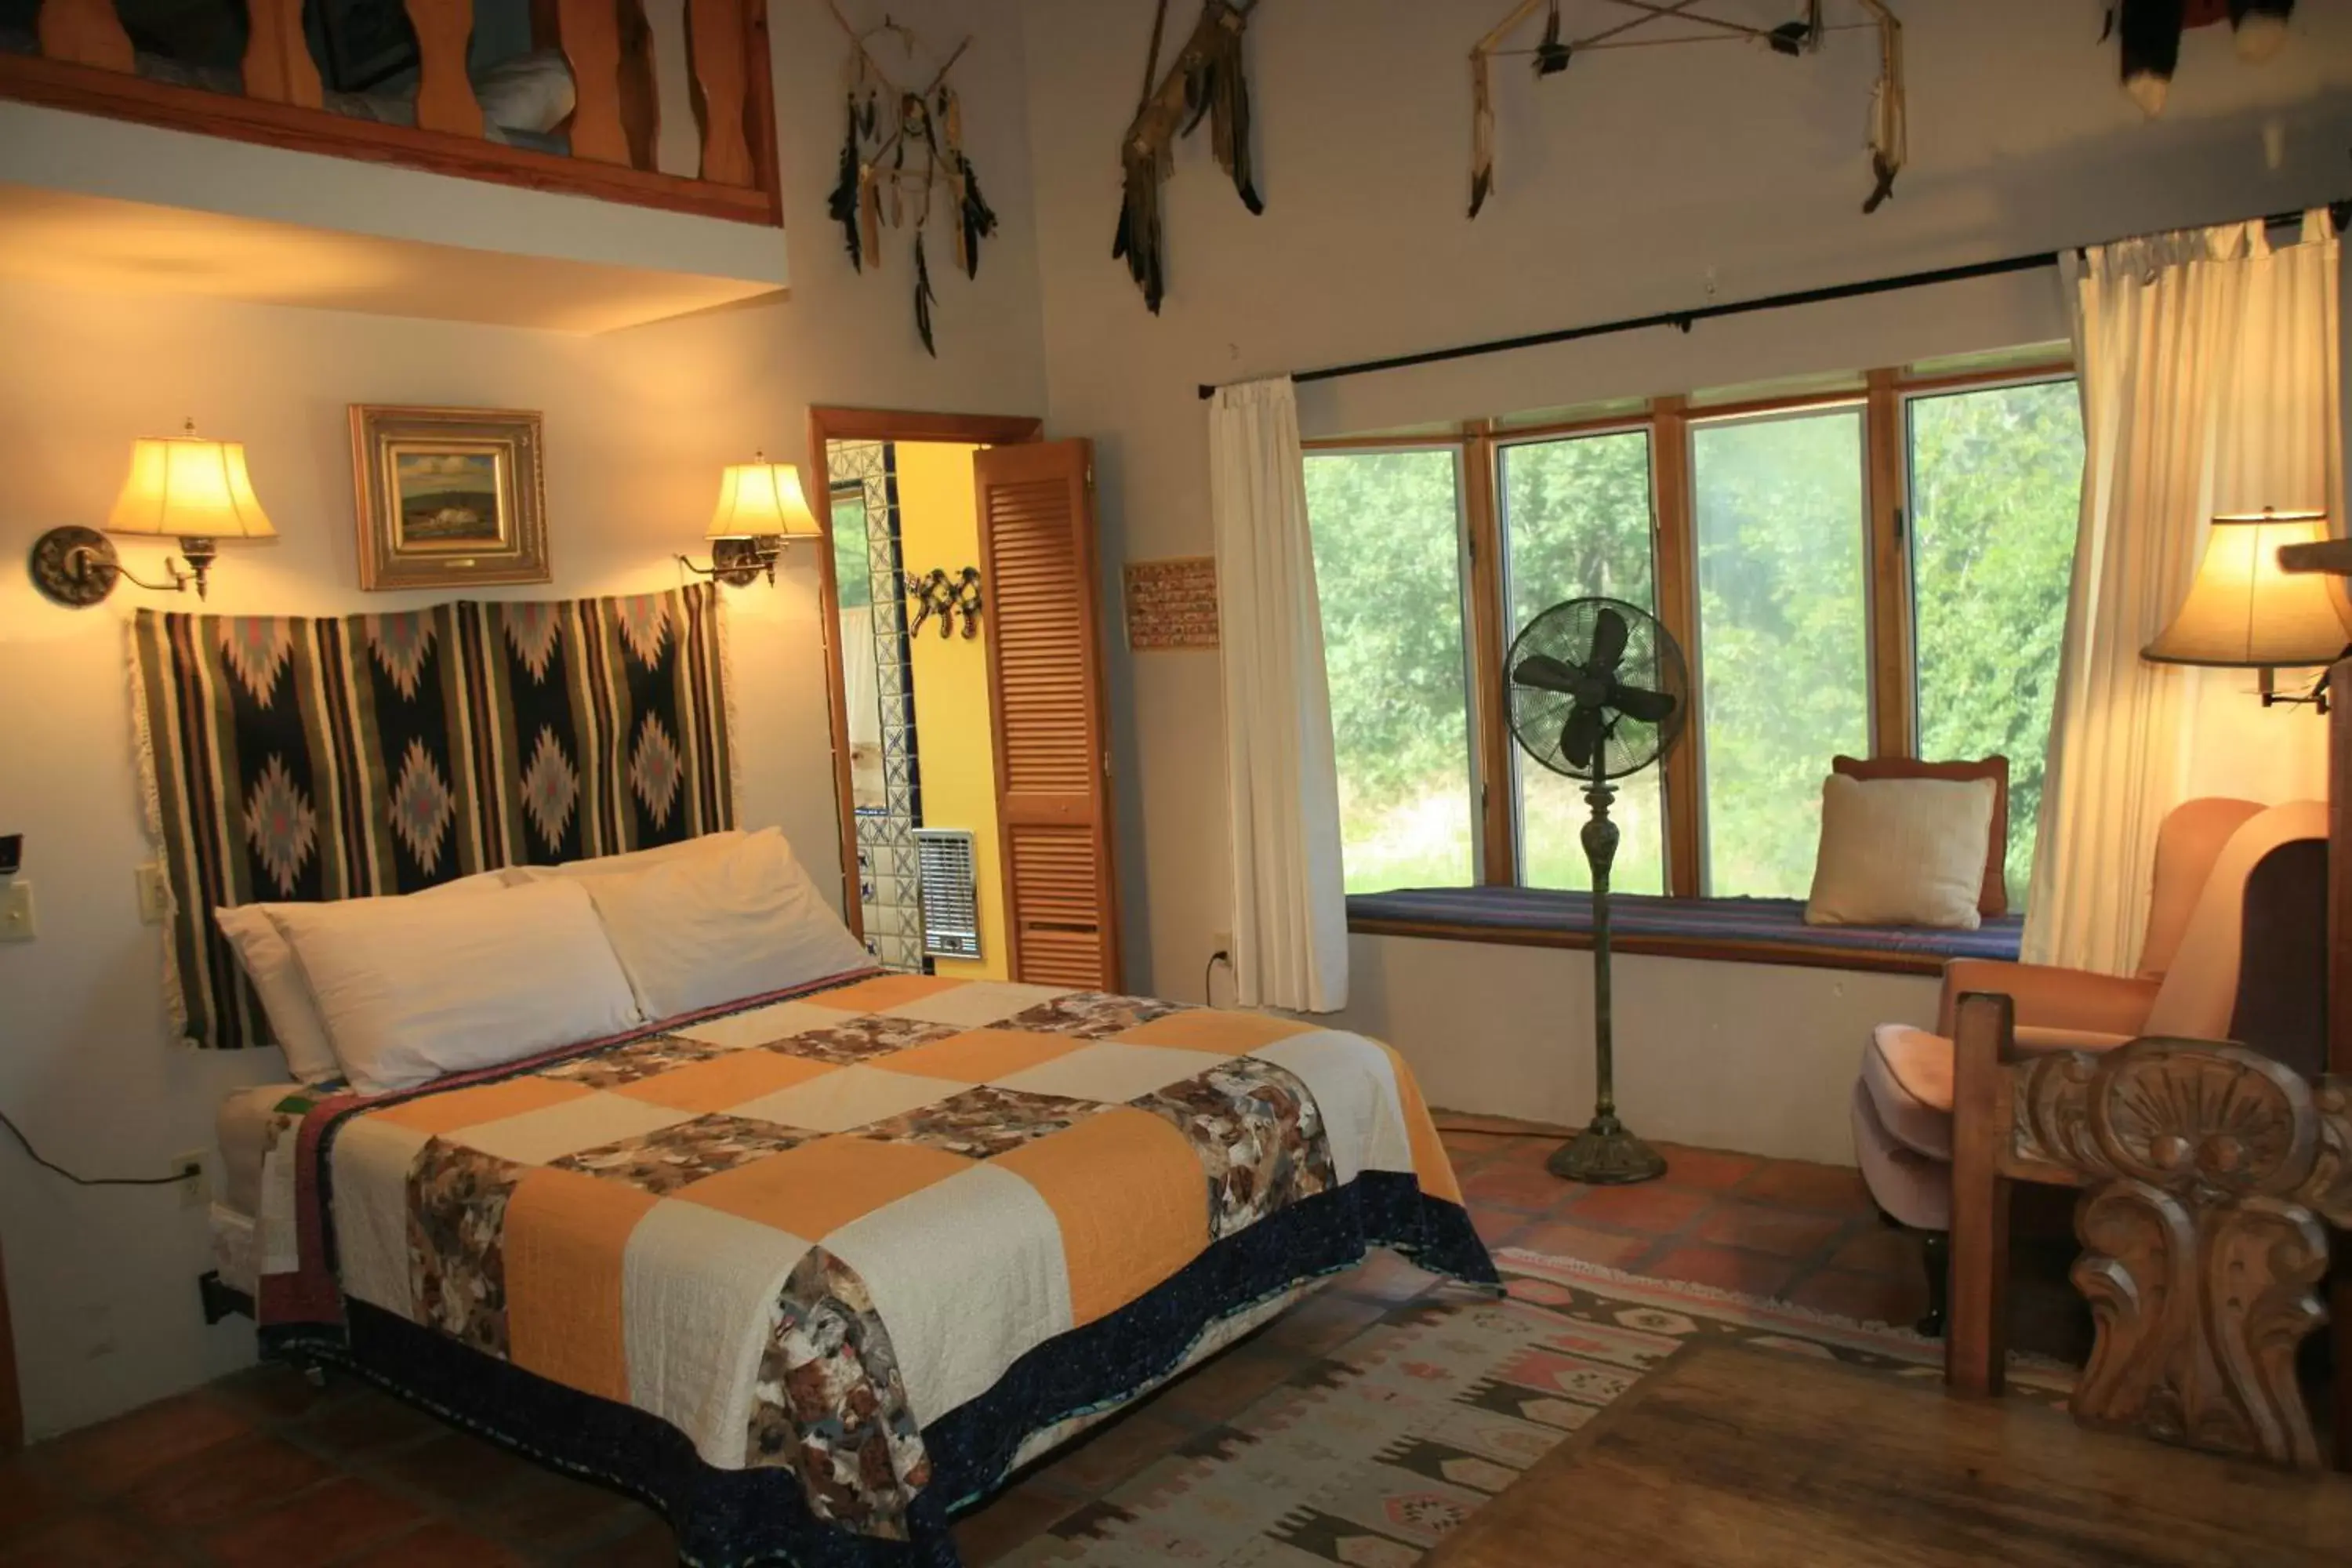 Bed, Room Photo in Spirit Tree Inn B&B